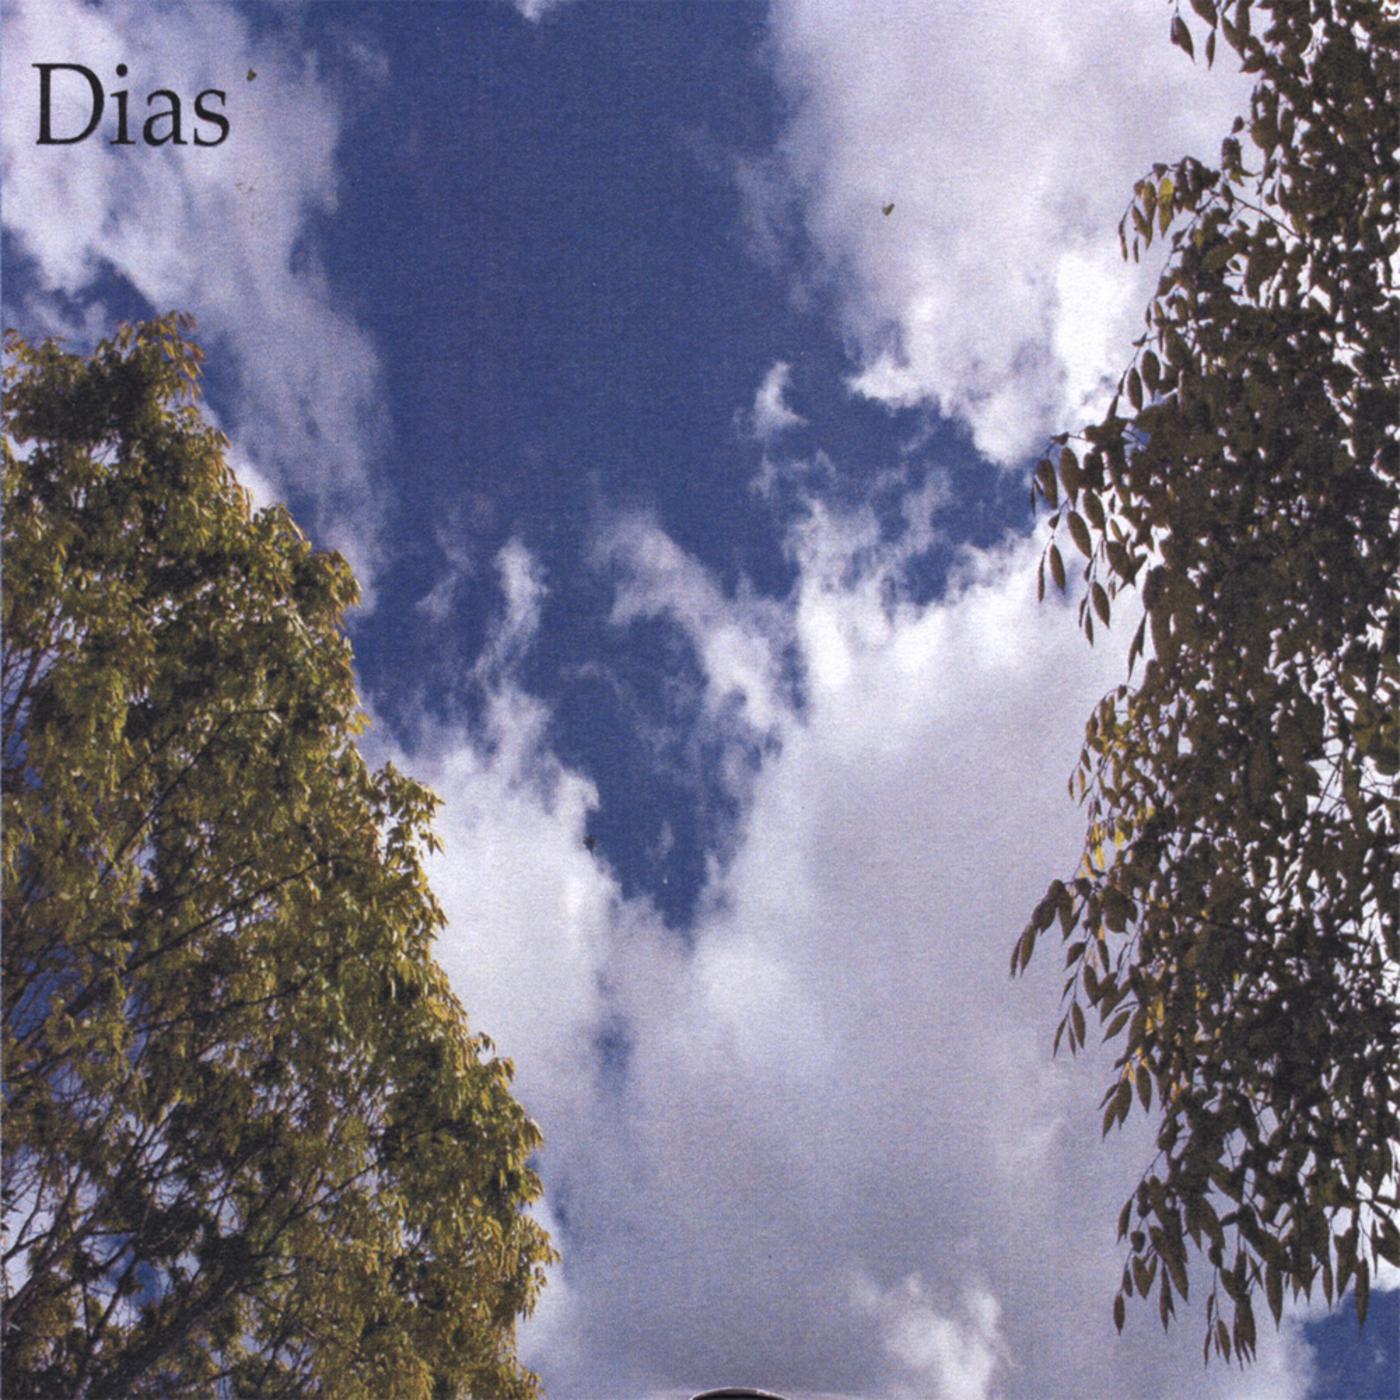 Dias - When She Comes Back